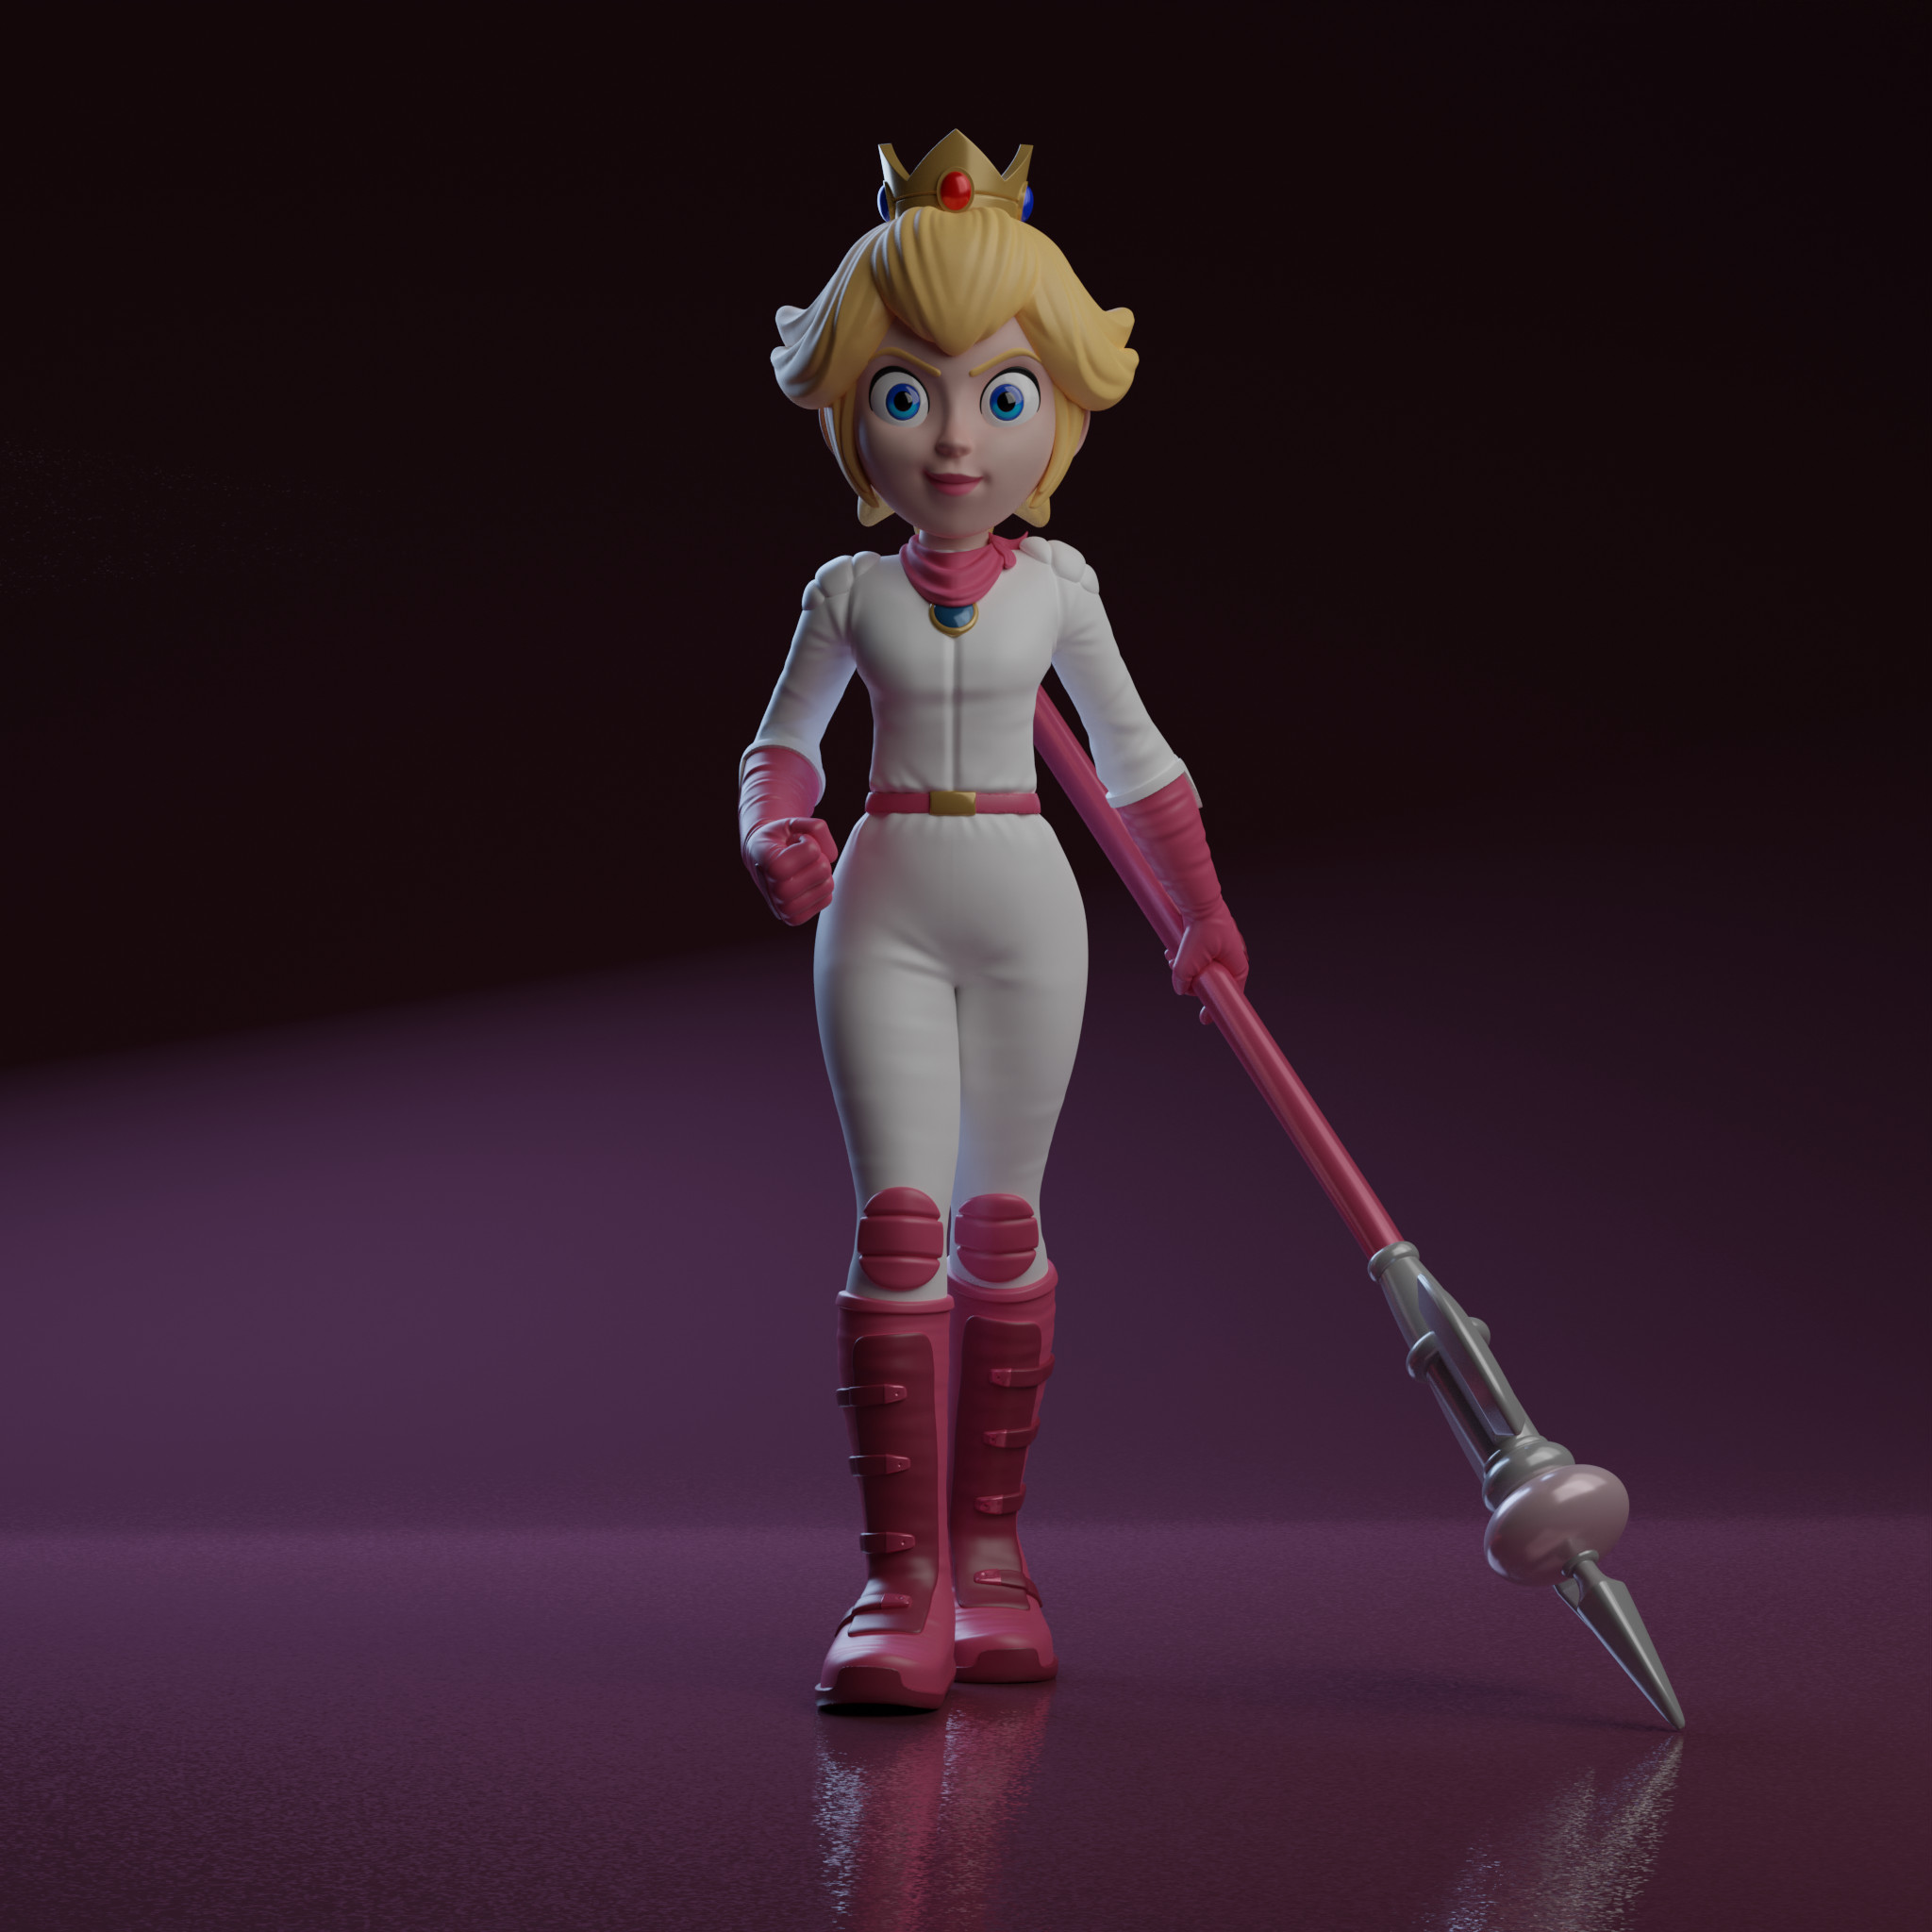 Fixed design of Princess Peach in the Mario Movie : r/Mario